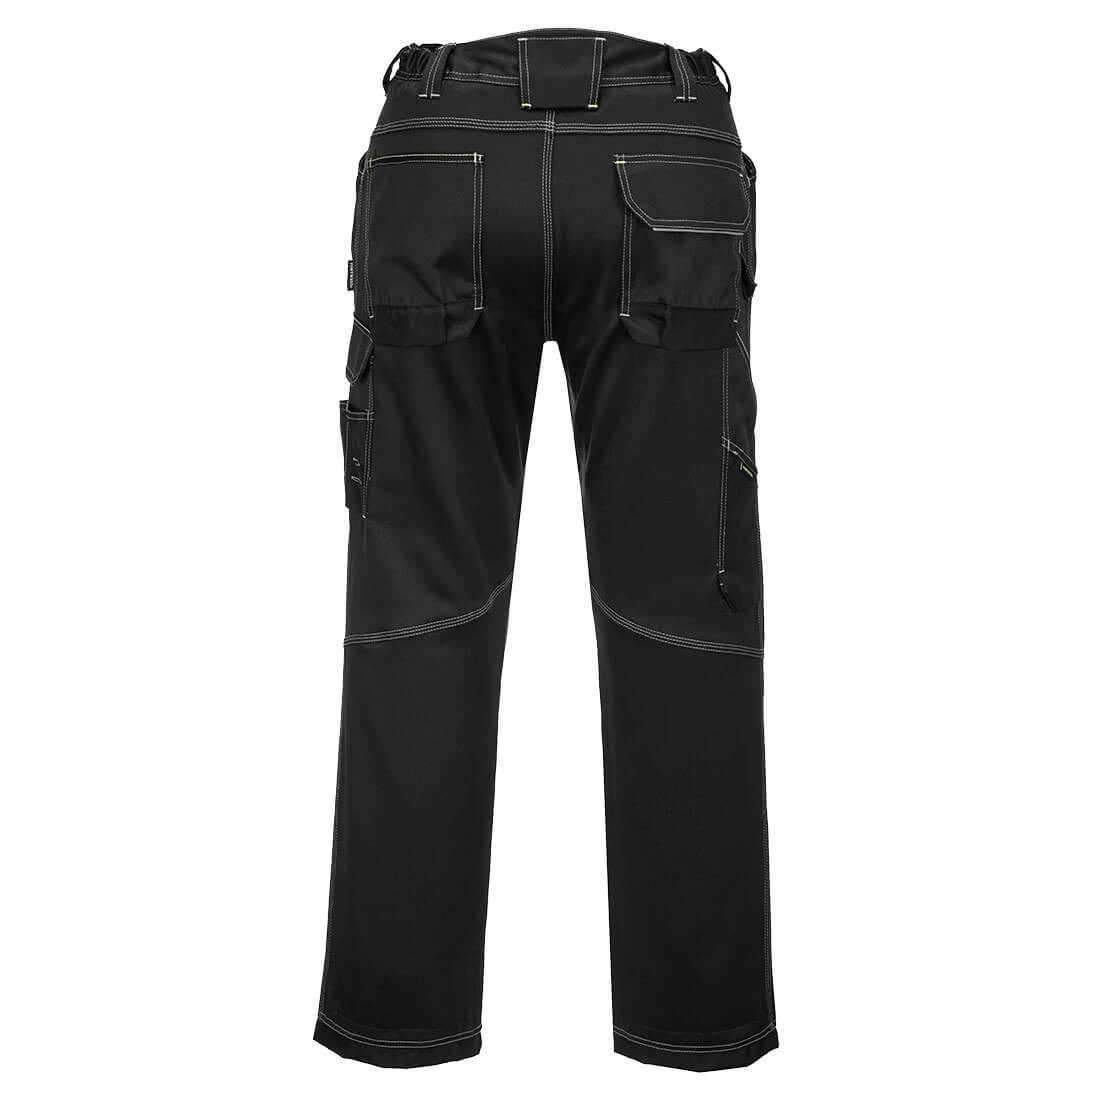 PW3 Lined Winter Work Trousers - Safetywear